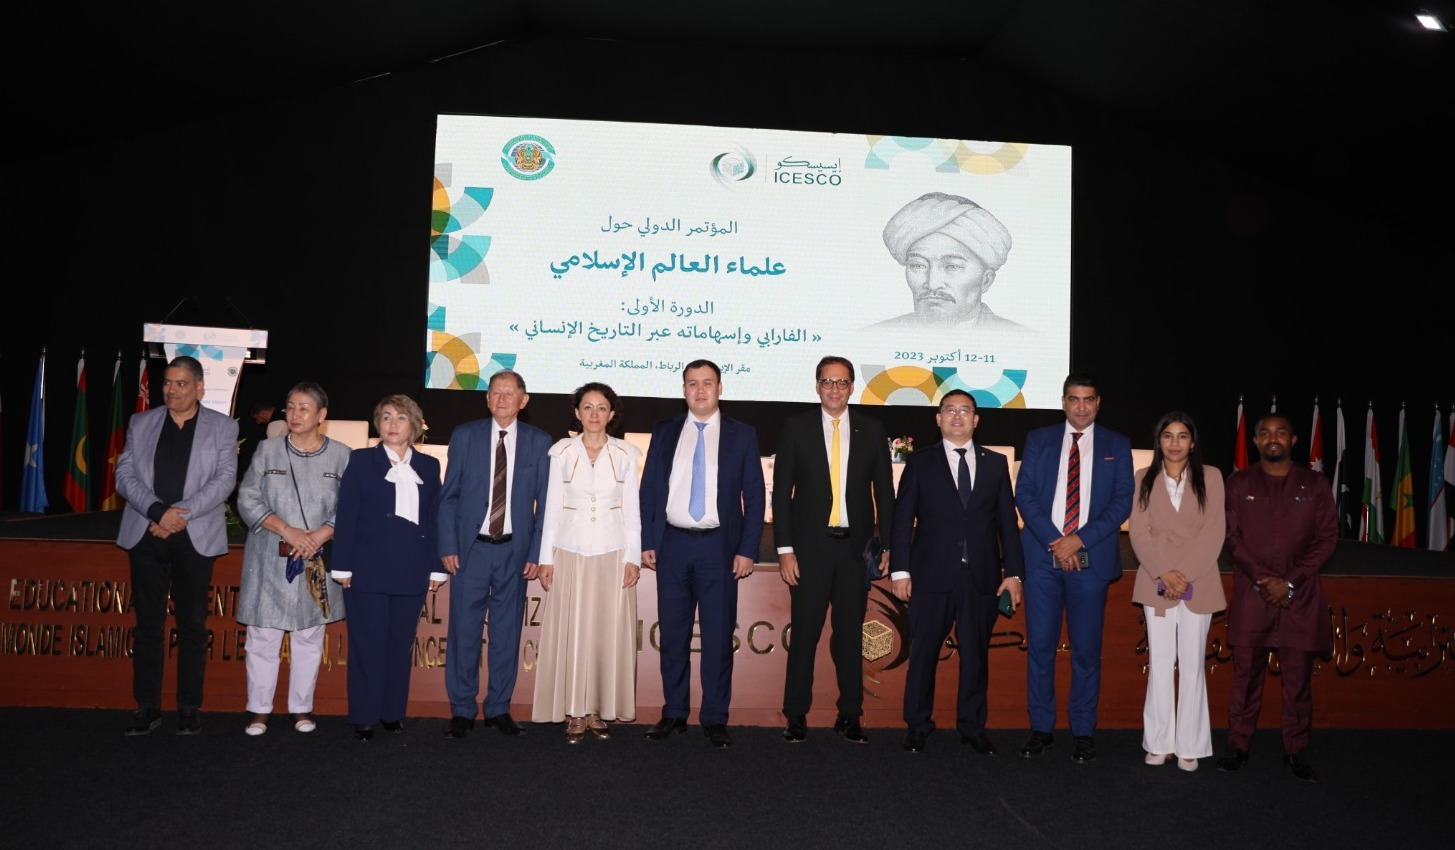 The conference "Al-Farabi's Contribution to Human Development" was held in Morocco